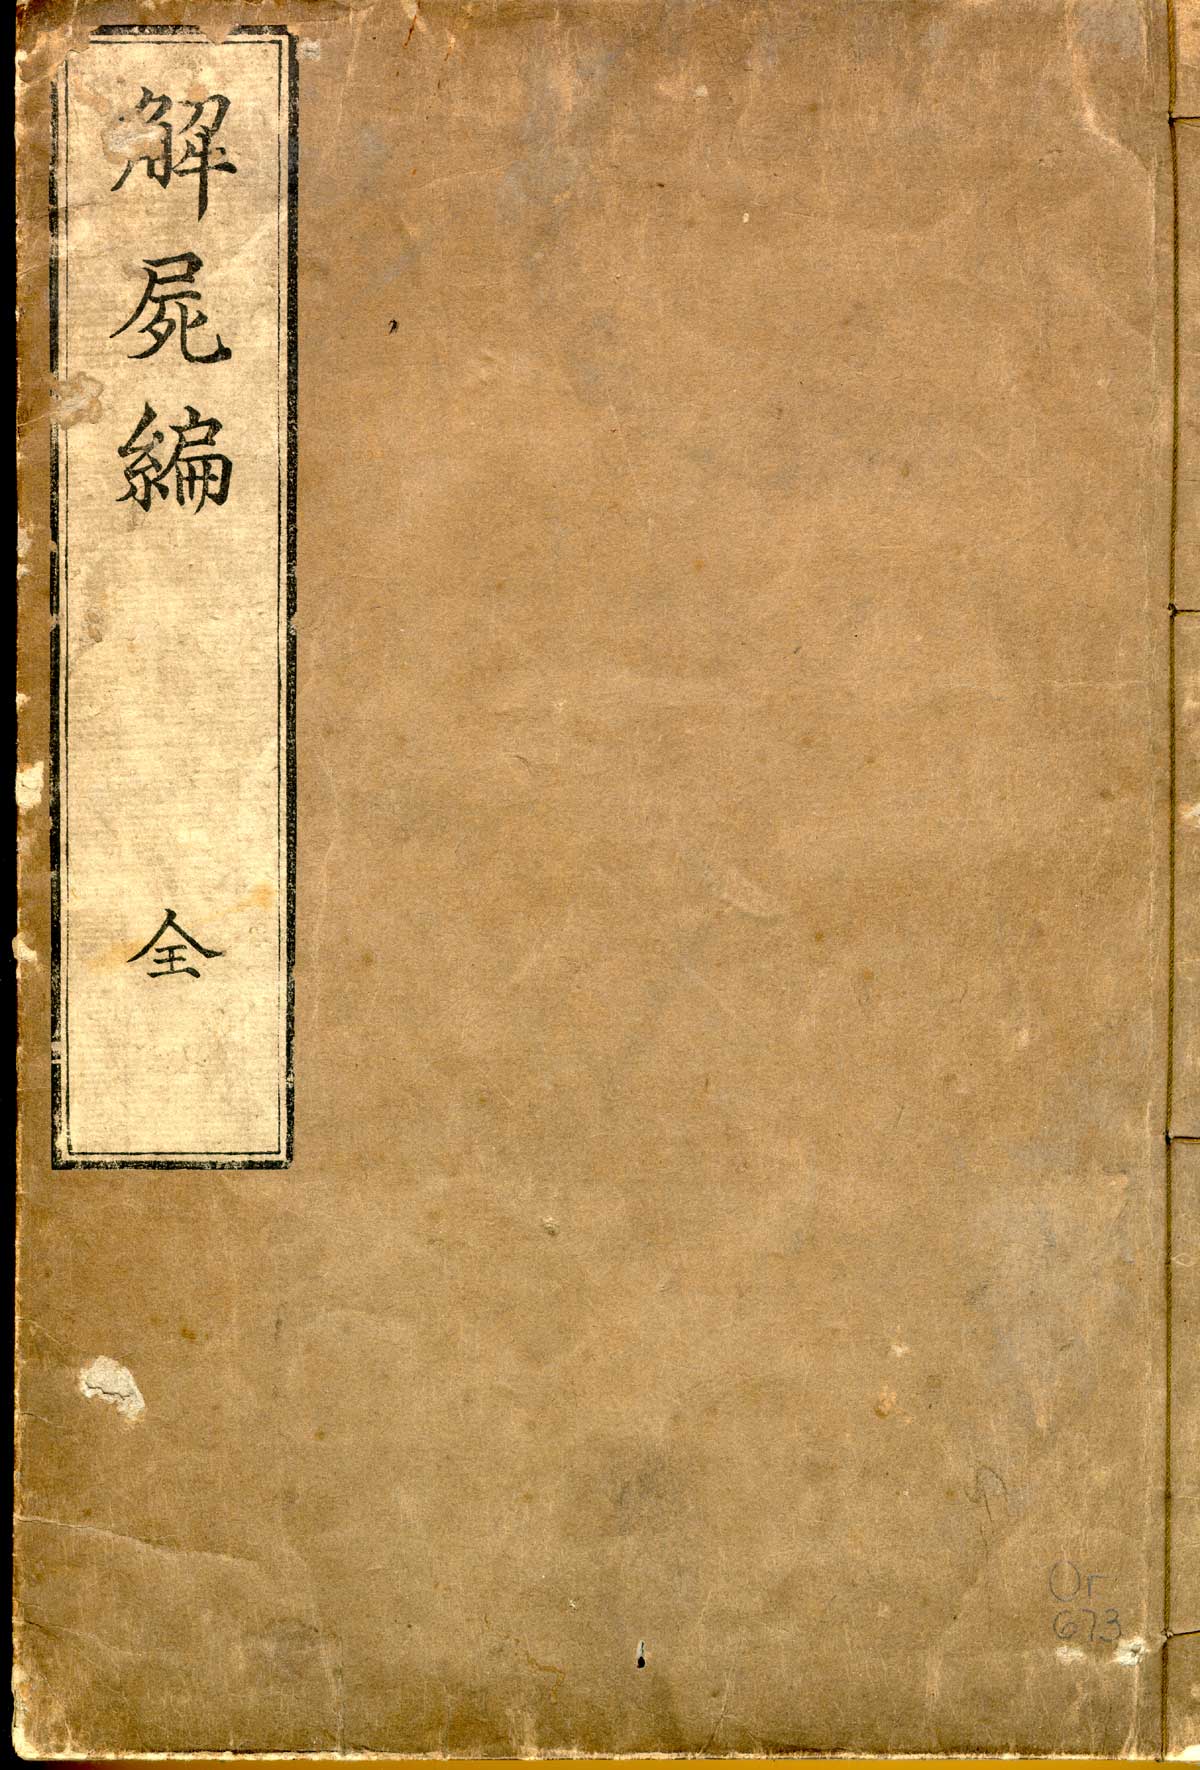 Cover with title label of Shinnin Kawaguchi's Kaishi hen, NLM Call no.: WZ 260 K21k 1772.